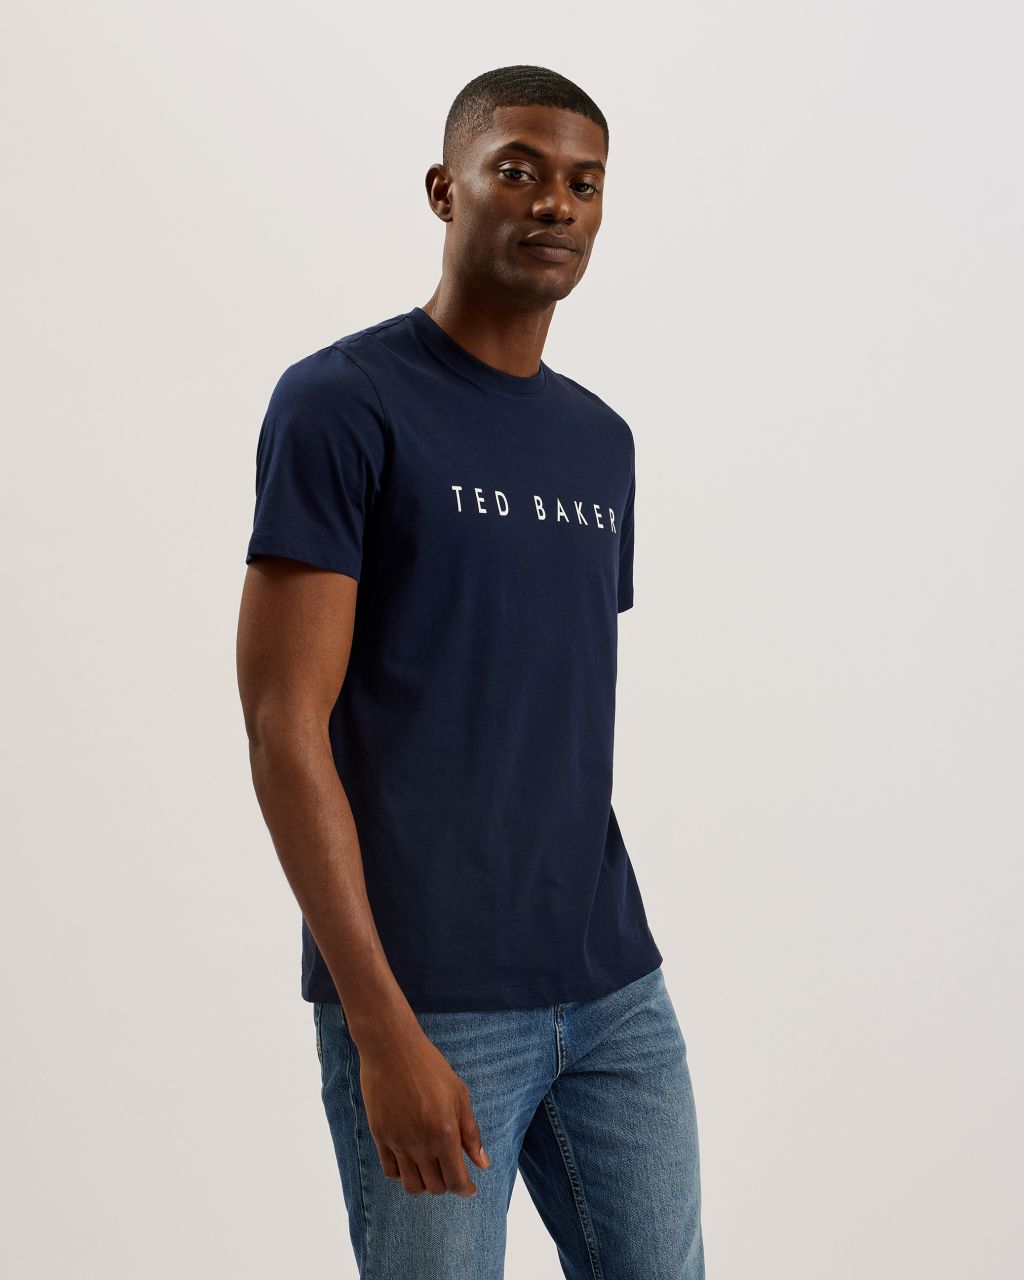 Ted Baker Men's SS Branded T-Shirt in Navy, Broni, Cotton